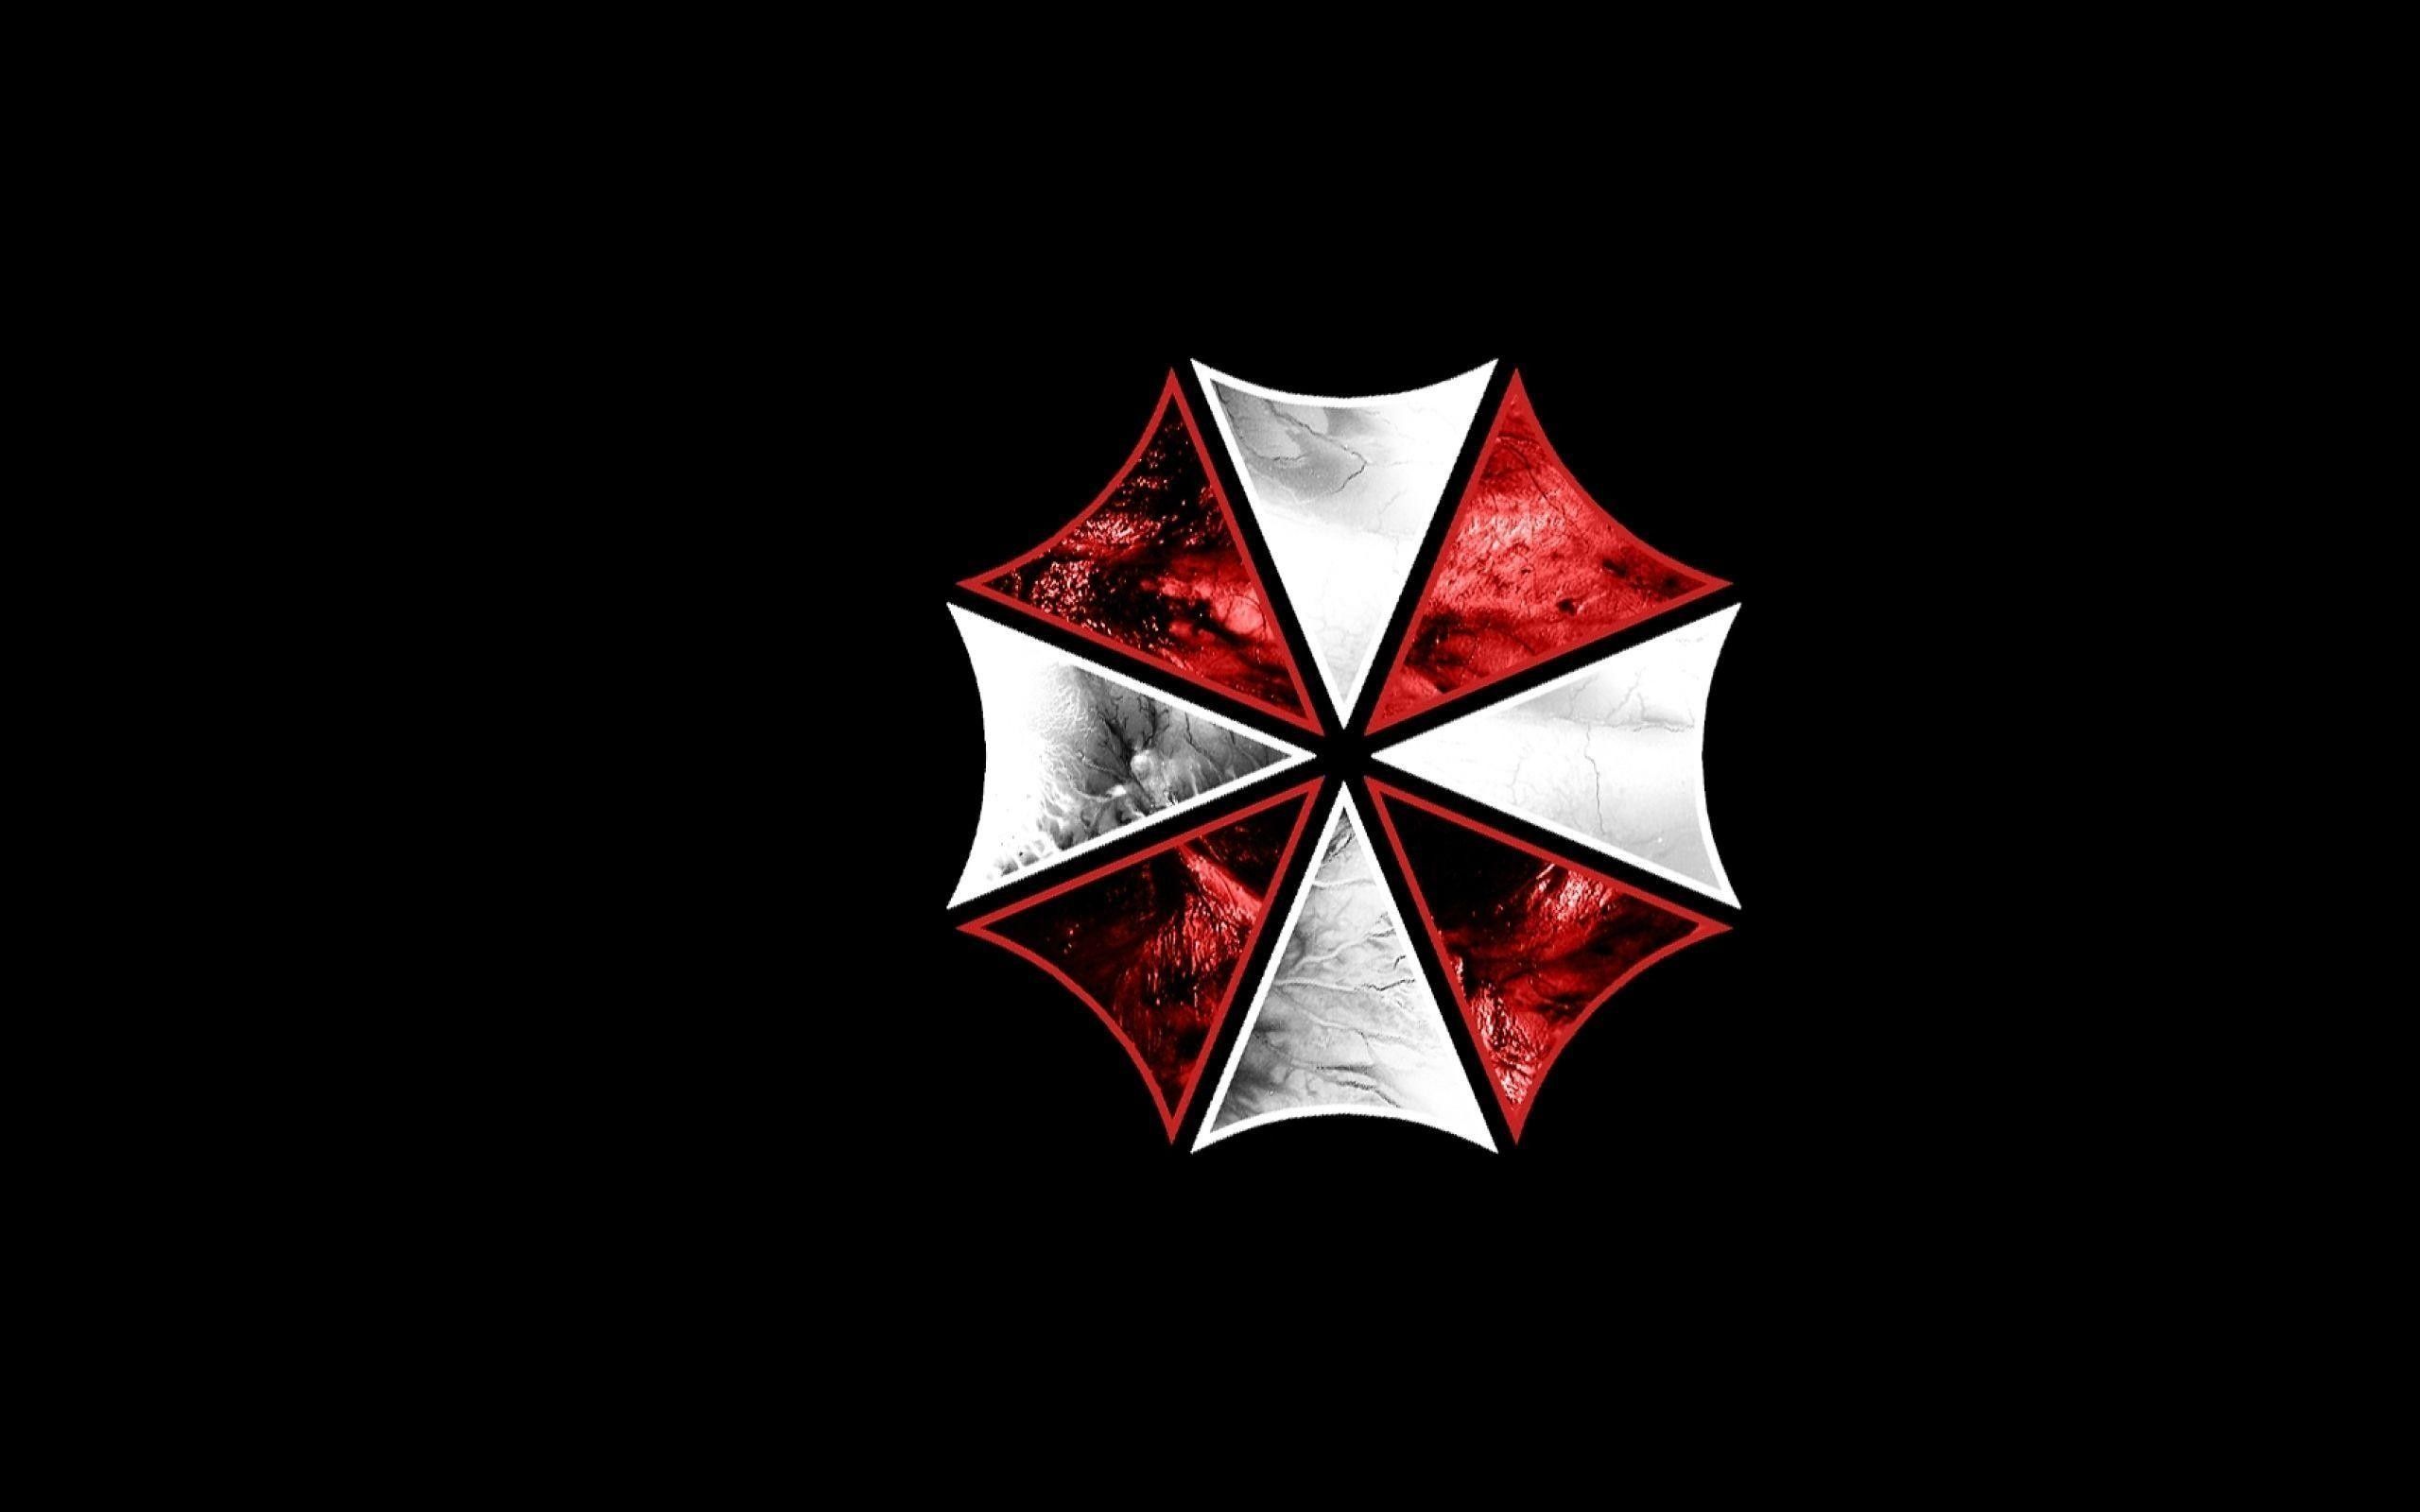 Umbrella Corporation Logo Wallpaper Free Umbrella Corporation Logo Background